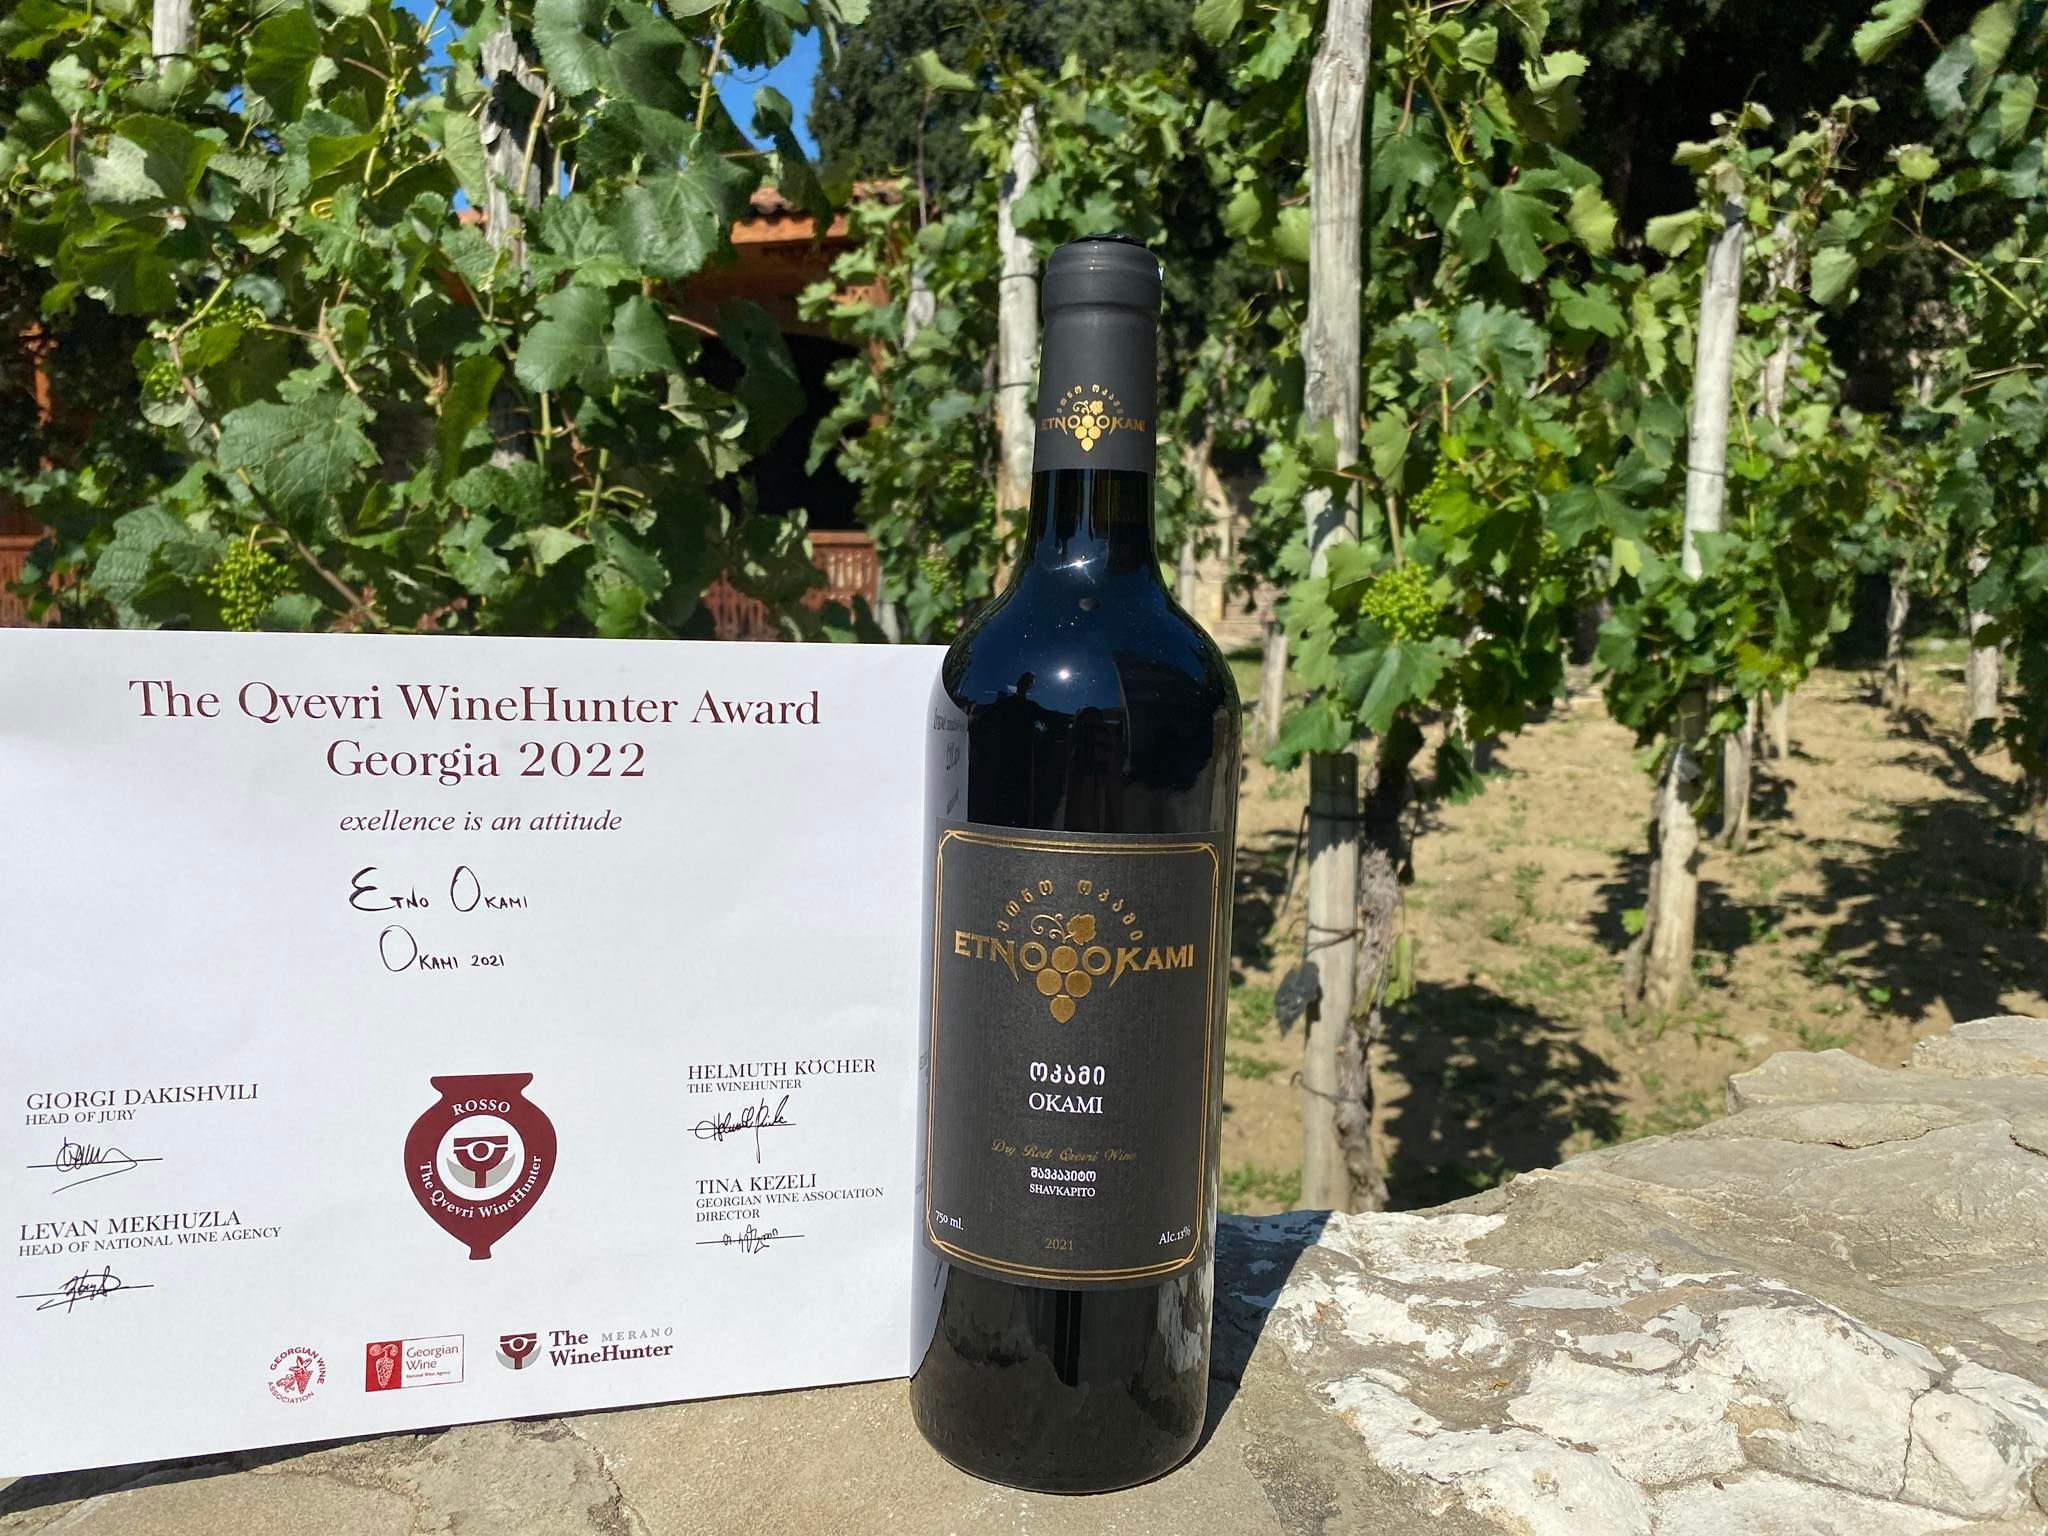 Winery Ethno Okami Is One of the Winners of “THE QVEVRI WINEHUNTER”!